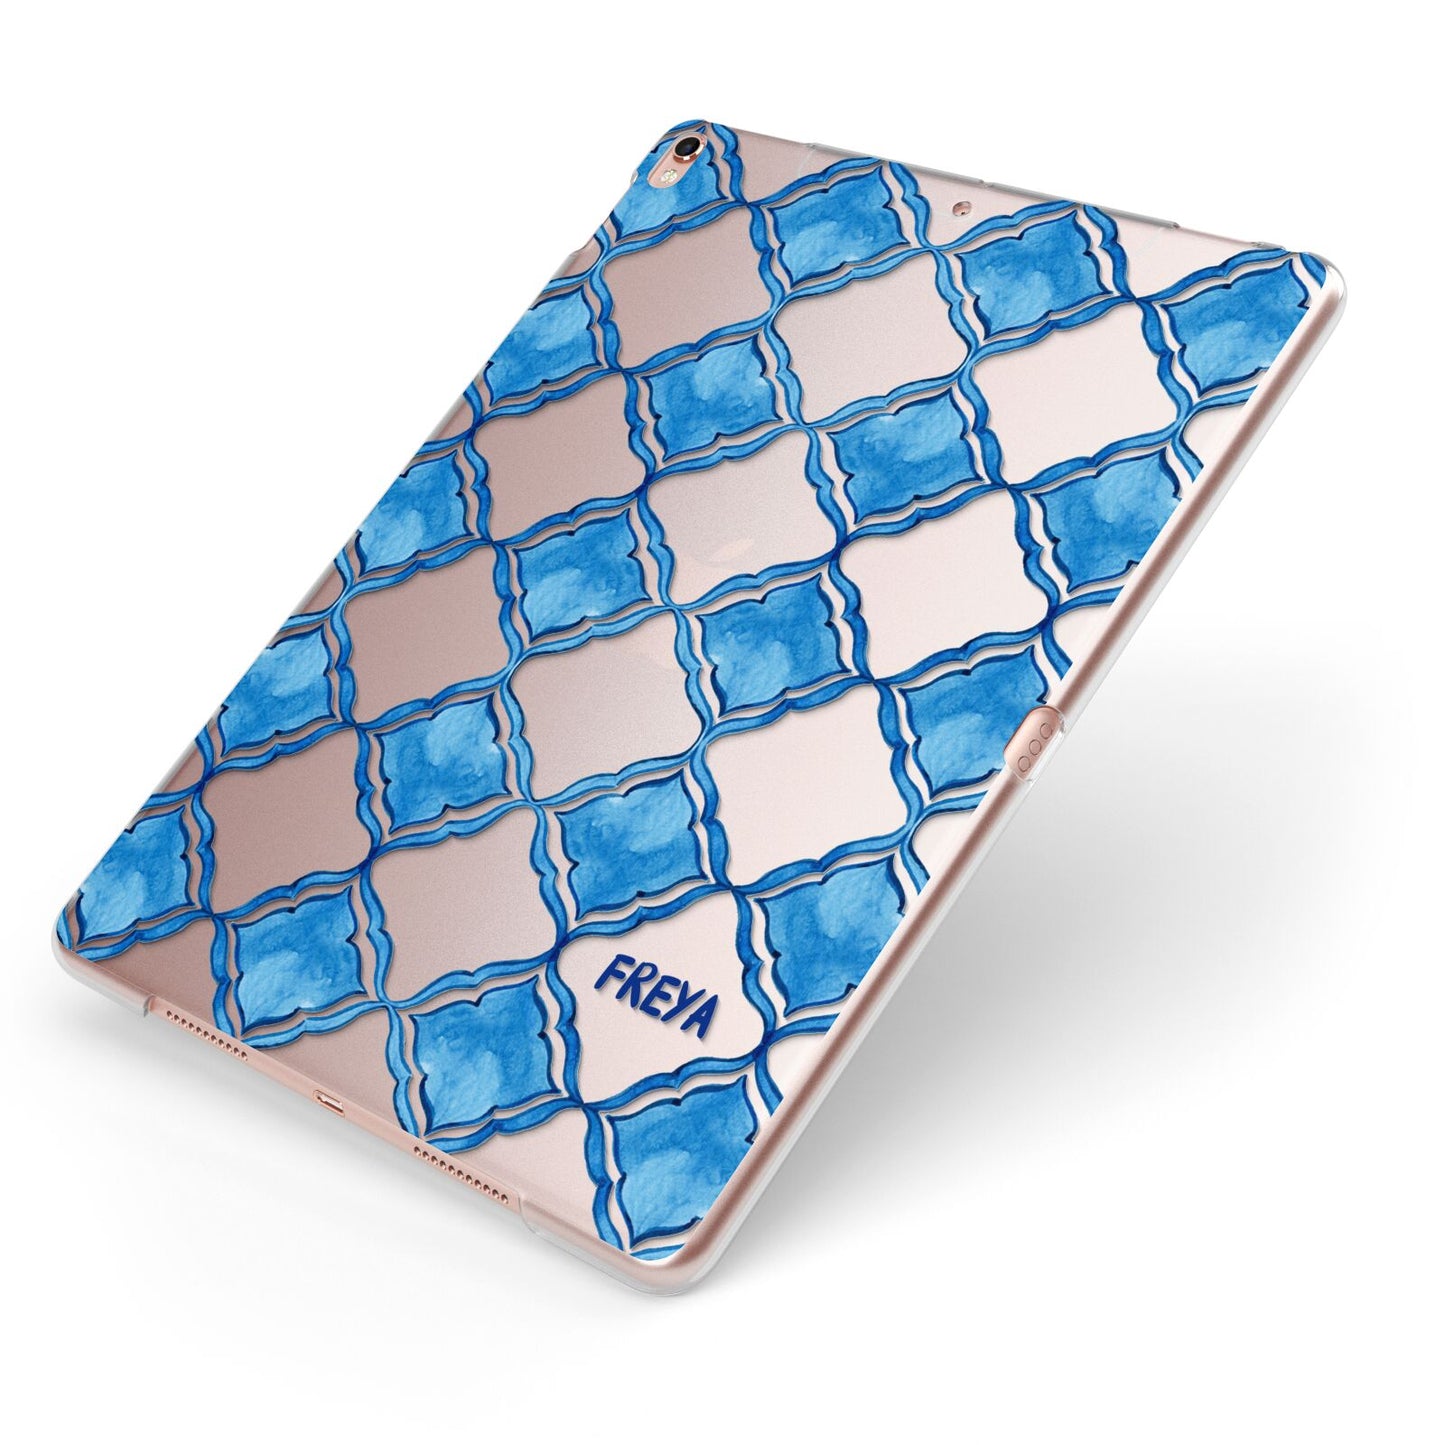 Personalised Mediterranean Tiles Apple iPad Case on Rose Gold iPad Side View